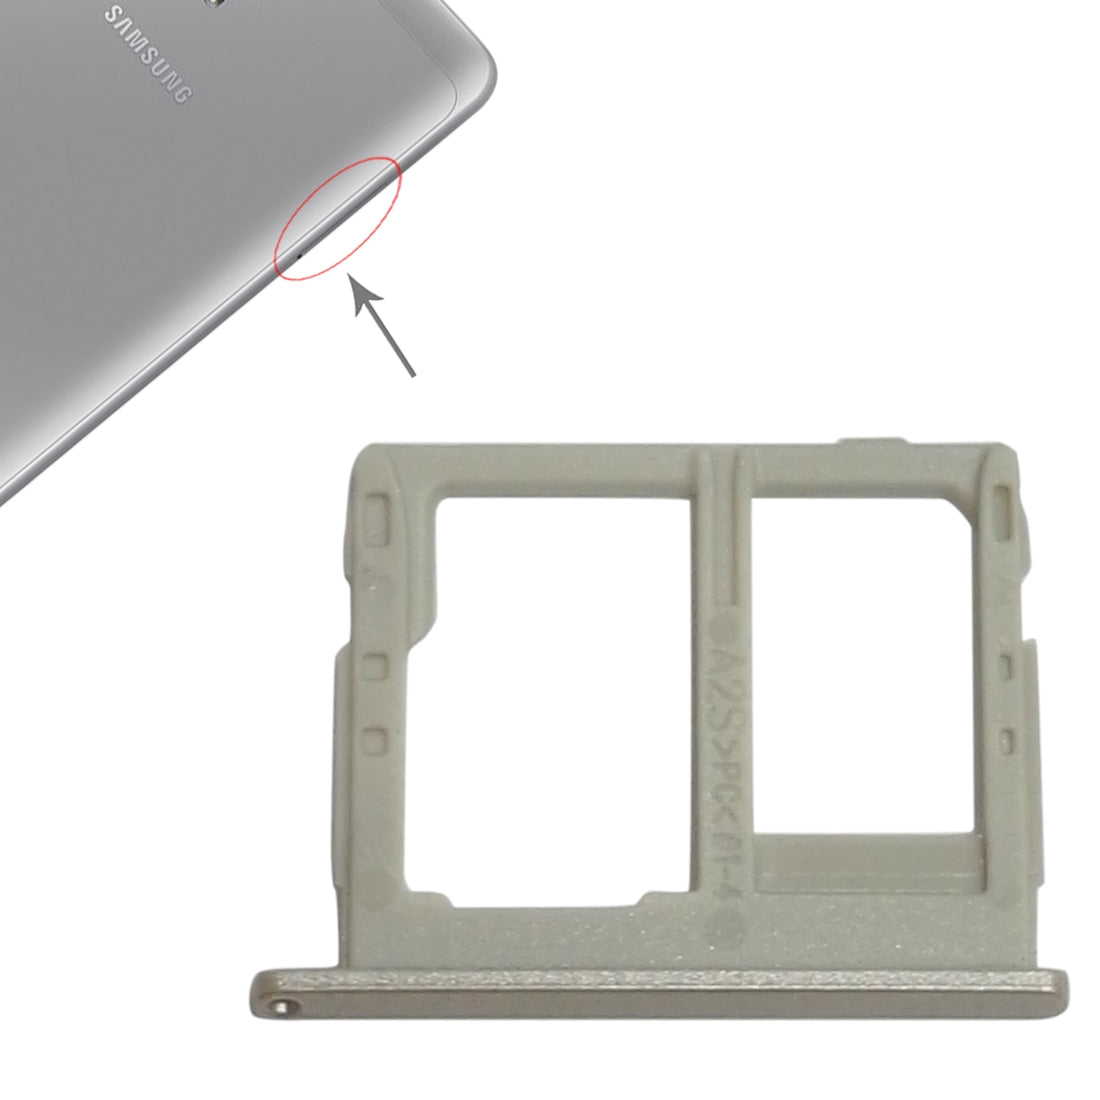 SIM / Micro SD Tray for Samsung Galaxy Tab A 8.0 / T380 / T385 Gold